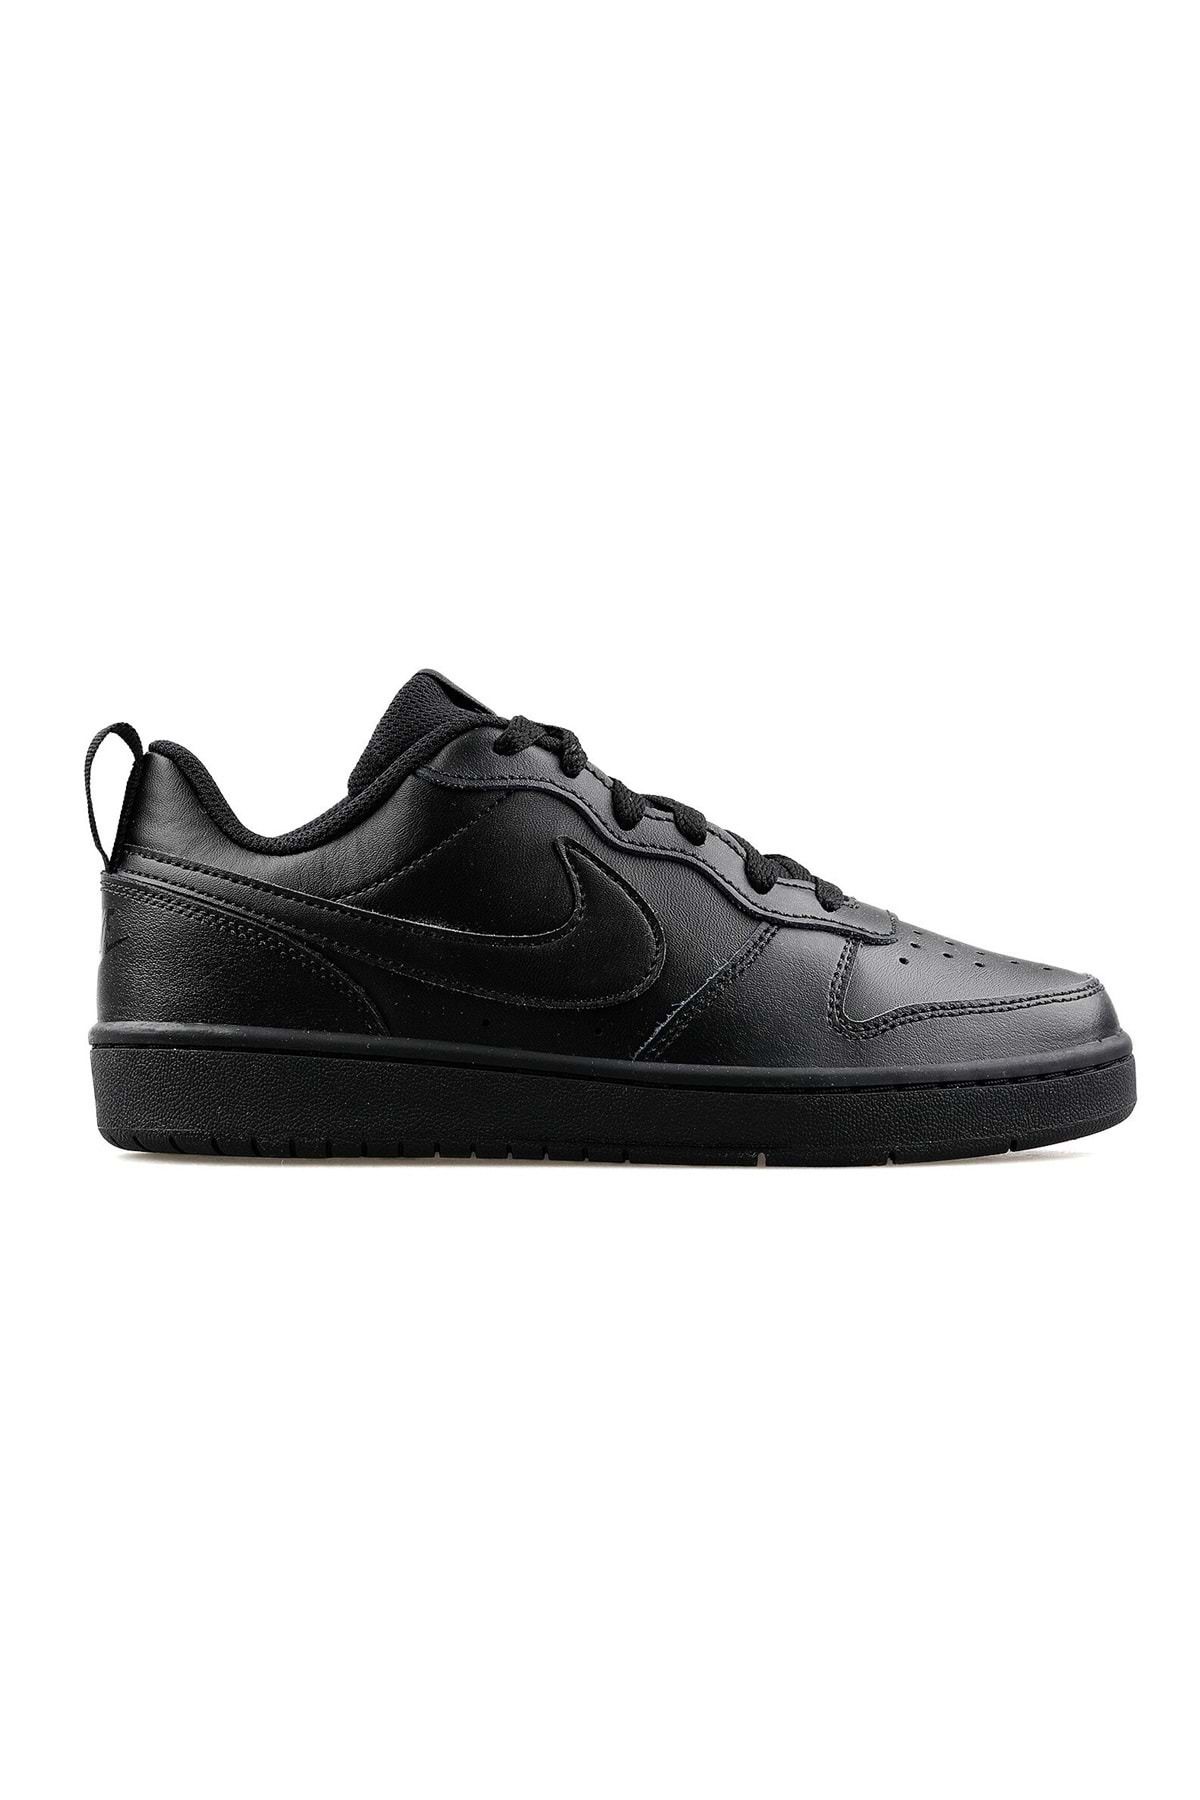 Nike Air Force Bq5448-001 Court Borough Low 2 Unisex Günlük Spor Ayakkabı Siyah